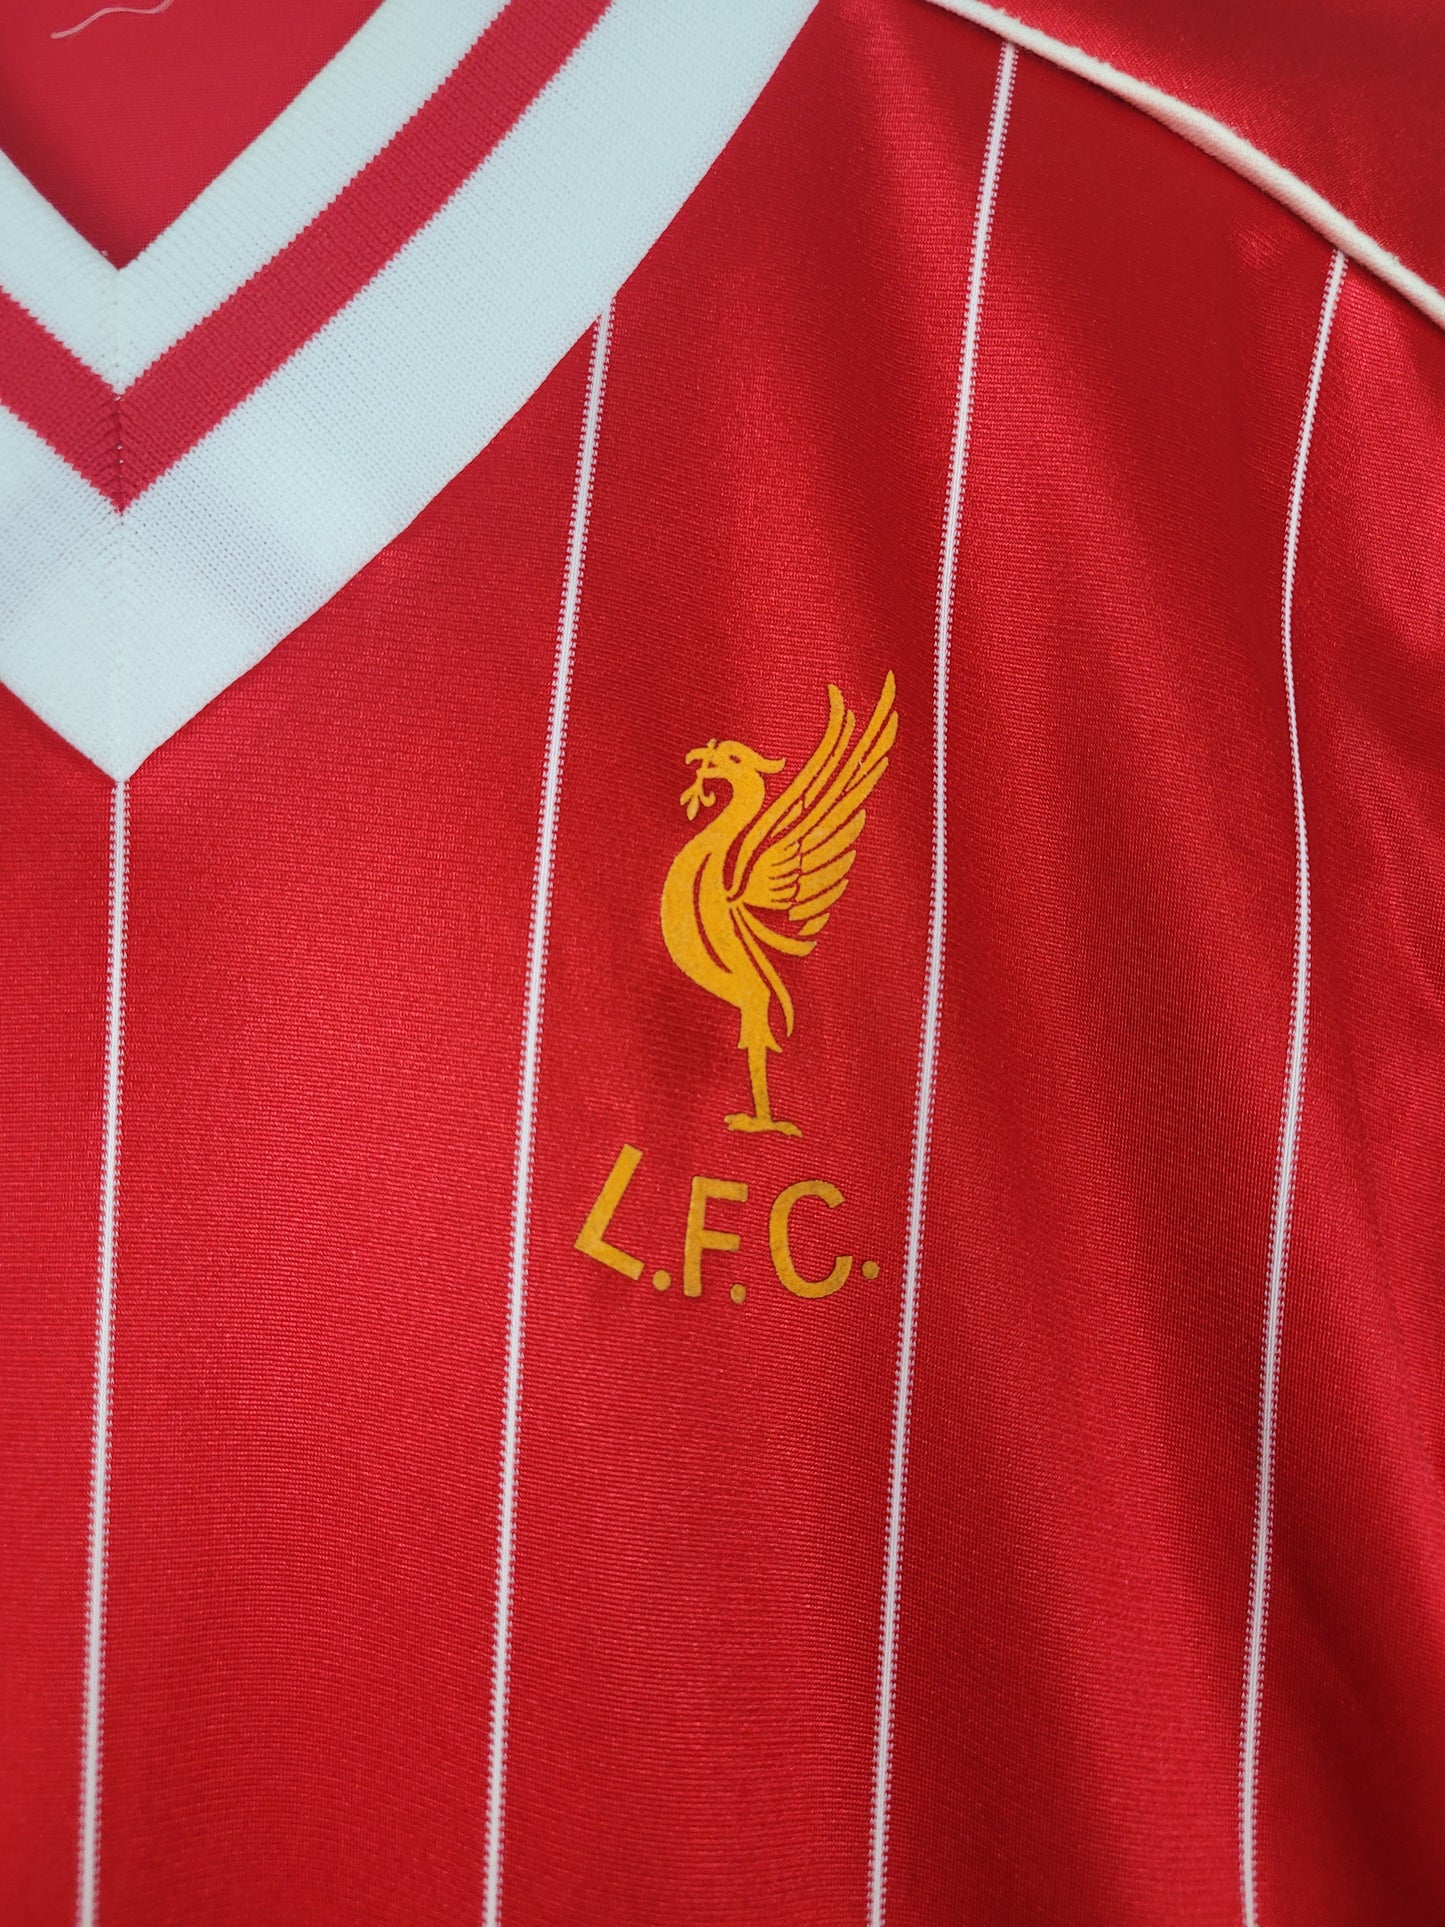 
                  
                    Original Liverpool F.C. Home Jersey 1982-1985 - M
                  
                